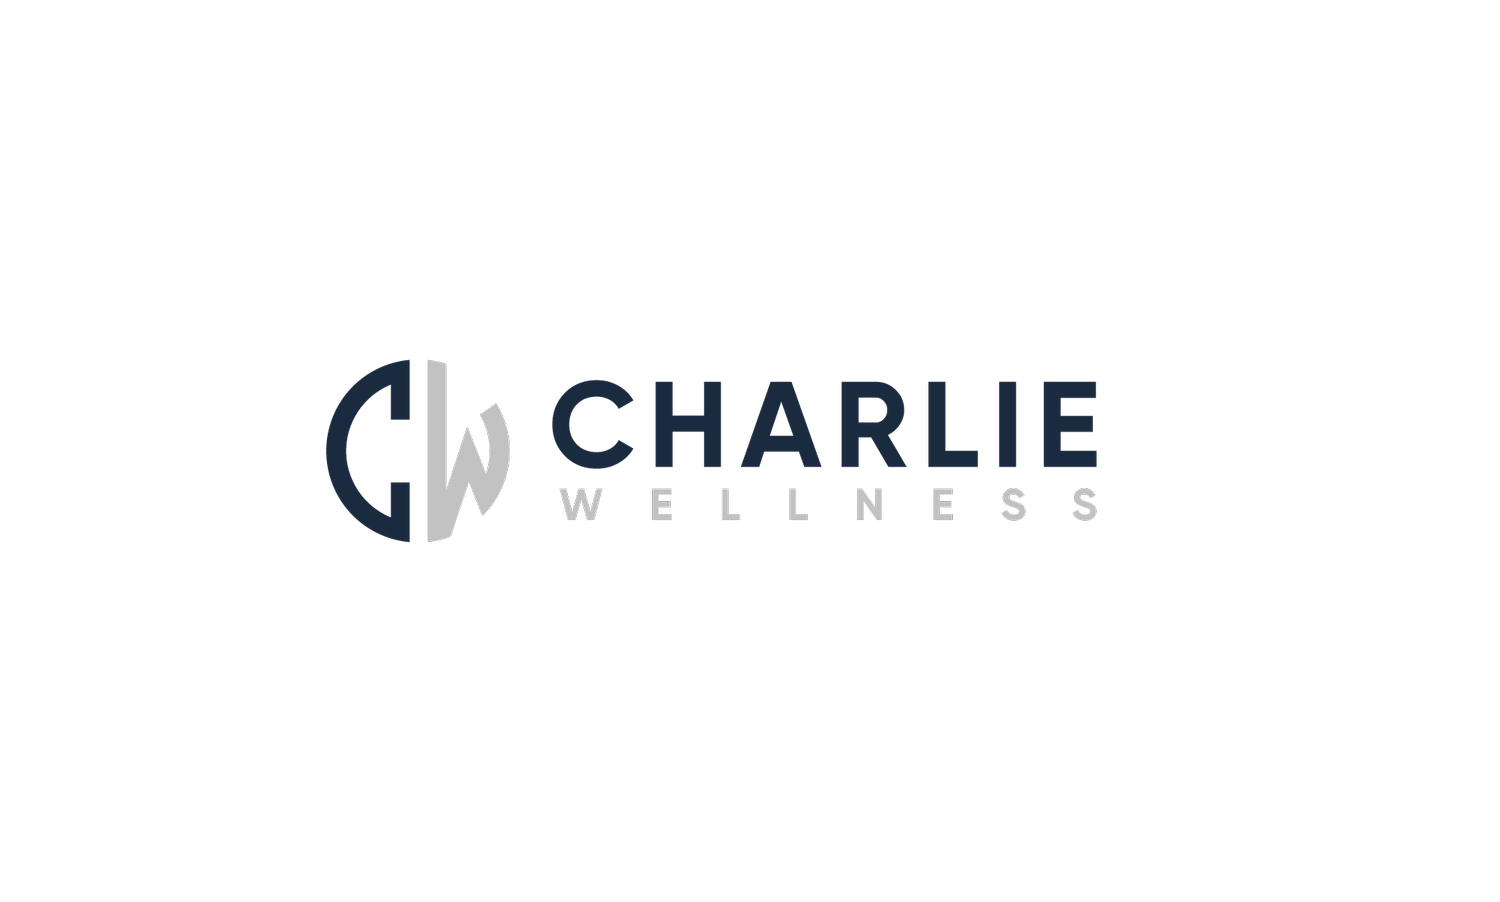 Charlie Wellness